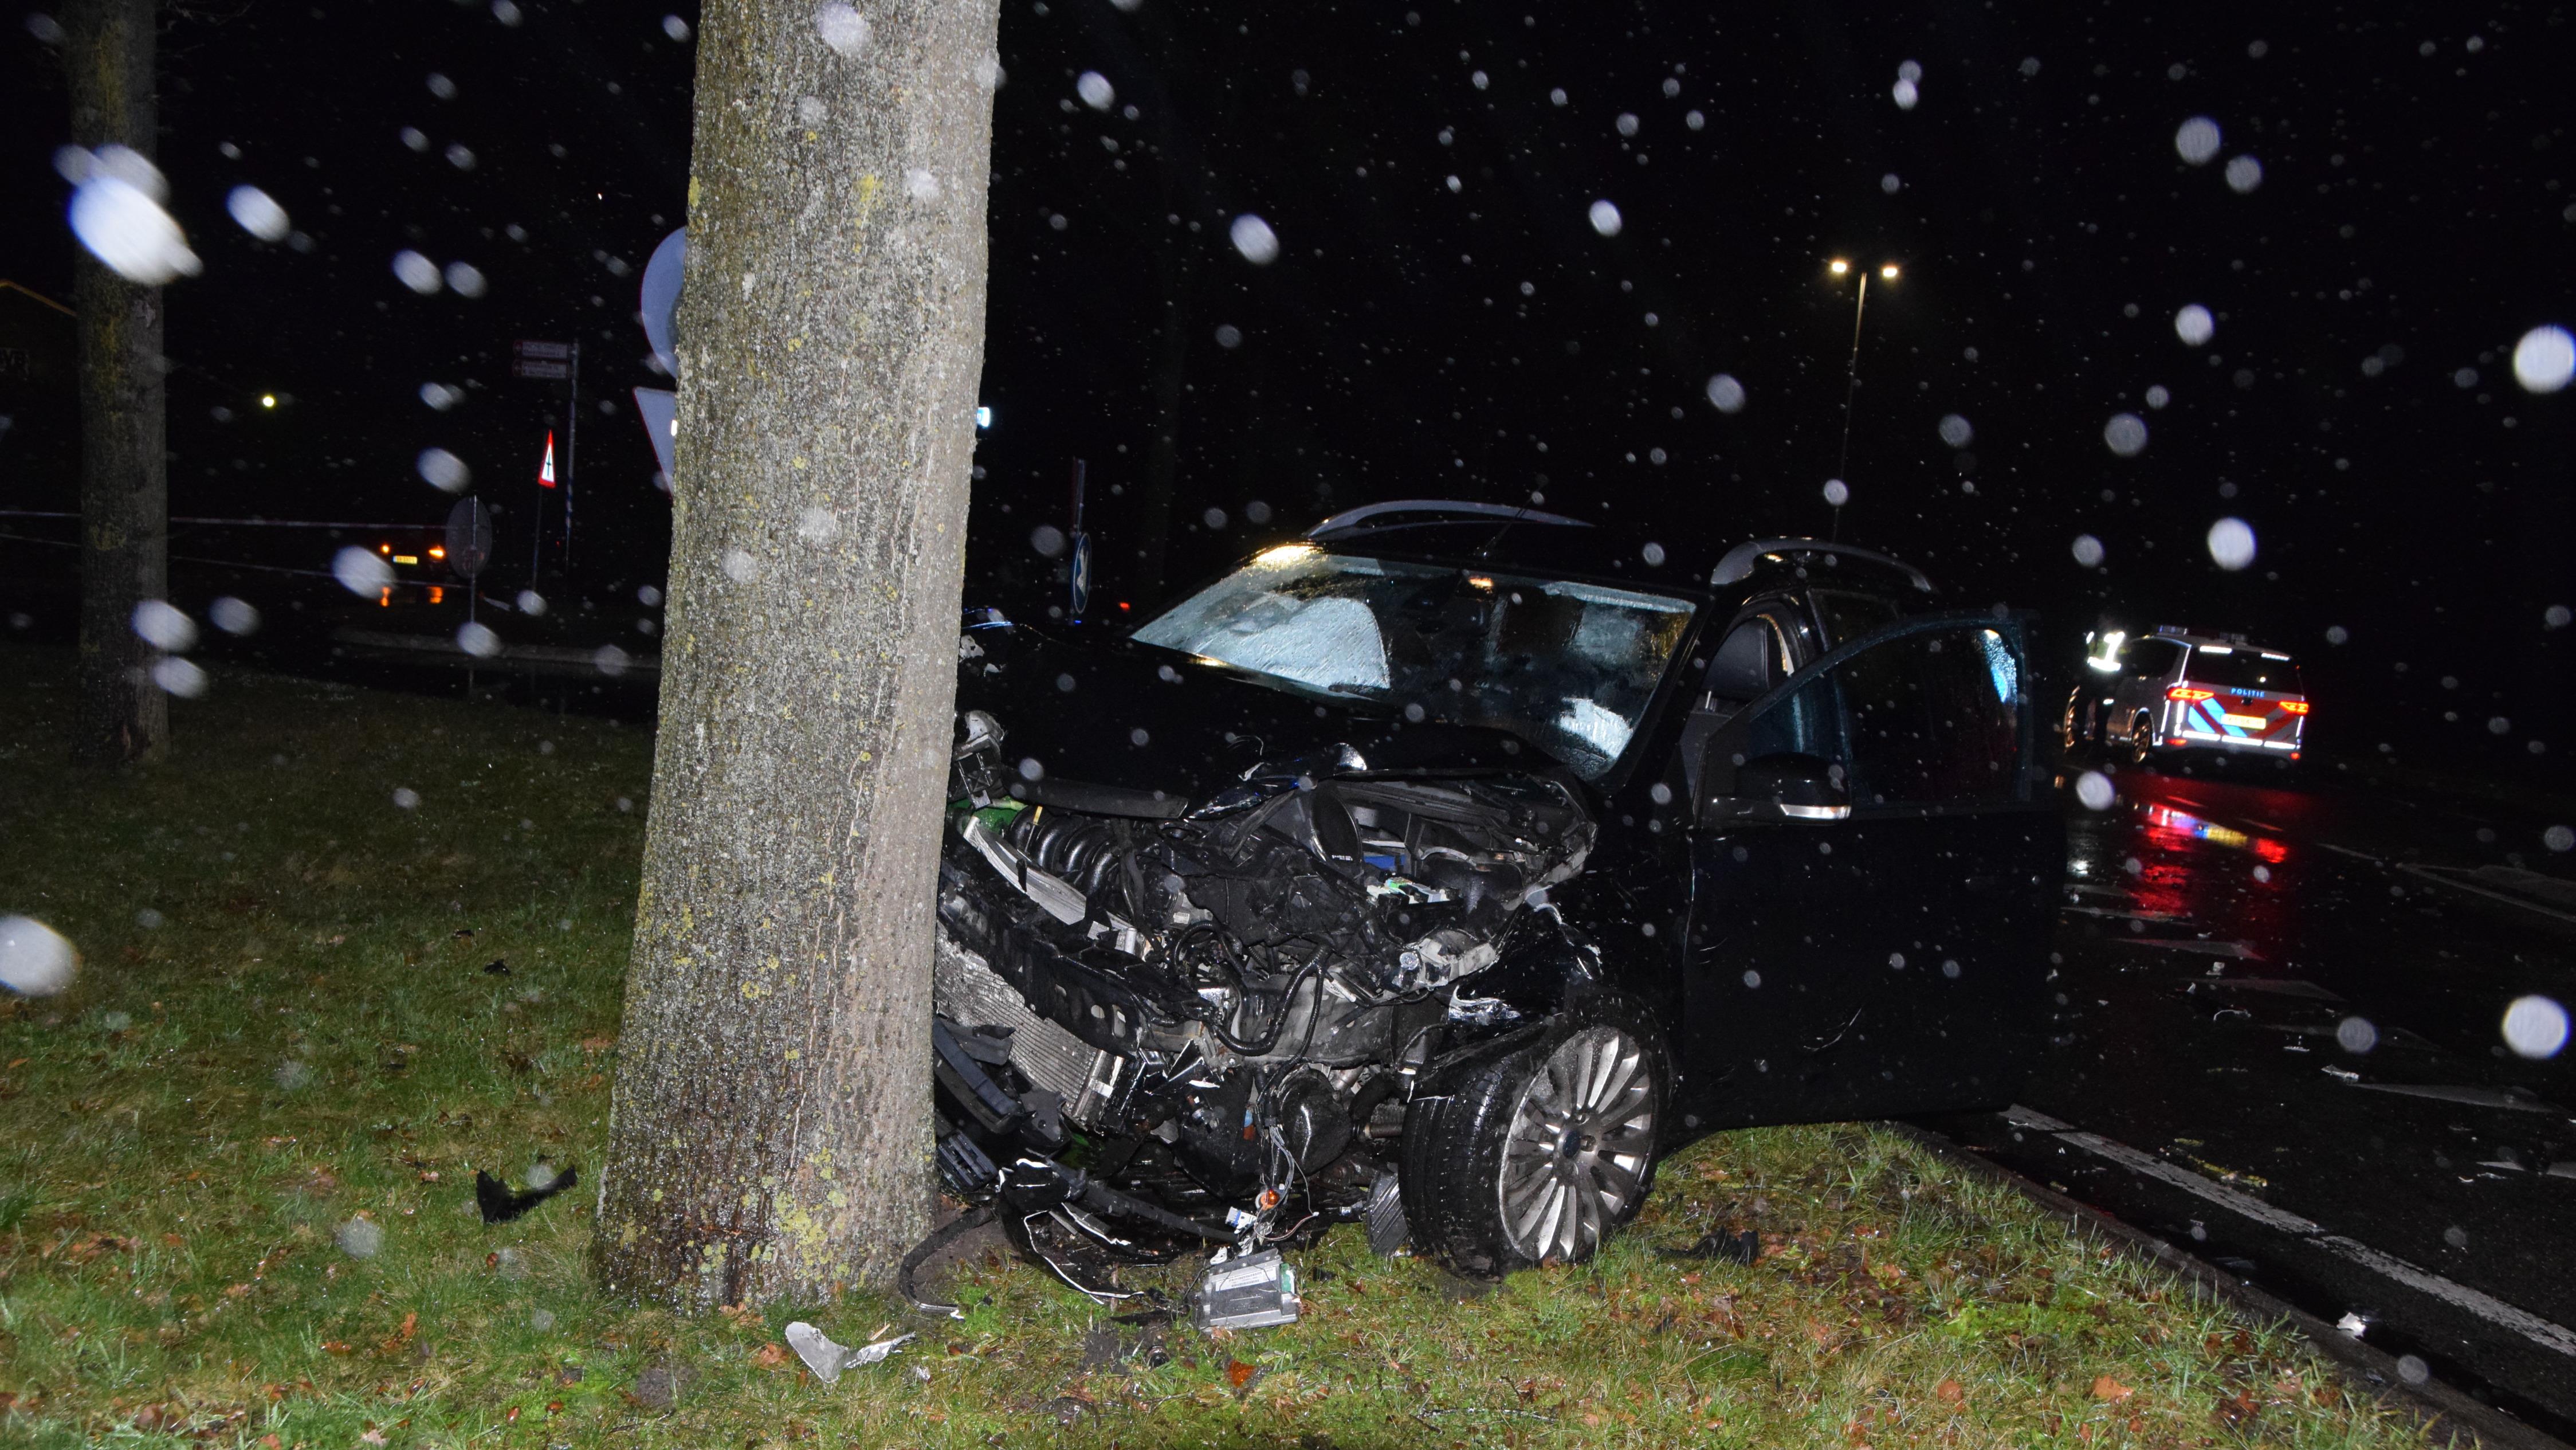 Auto total loss bij ongeluk in Hardenberg, automobilist gewond.